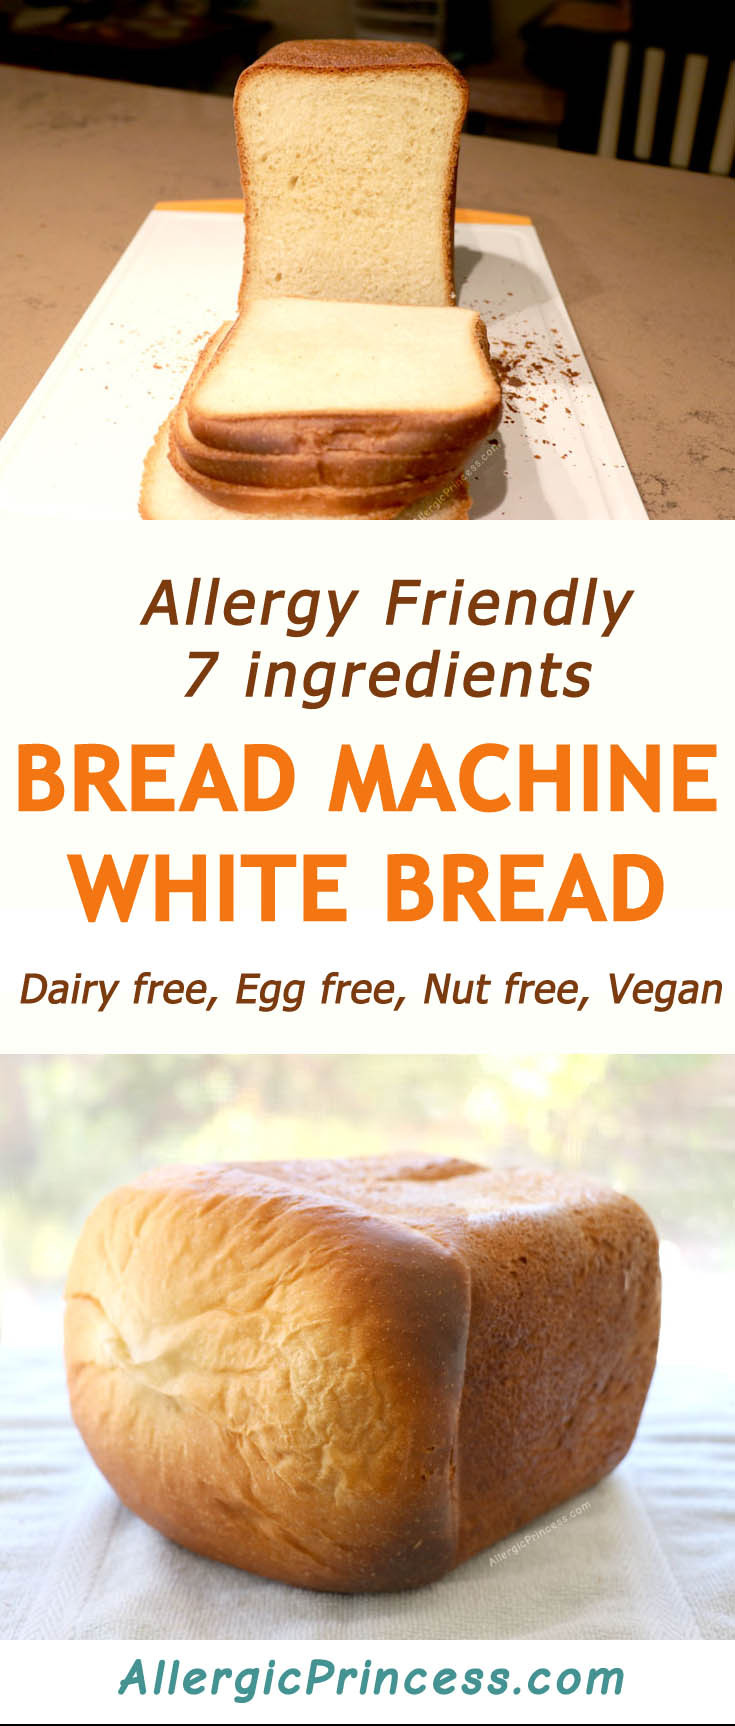 Is White Bread Vegan
 DAIRY FREE BREAD MACHINE WHITE BREAD ALLERGIC PRINCESS